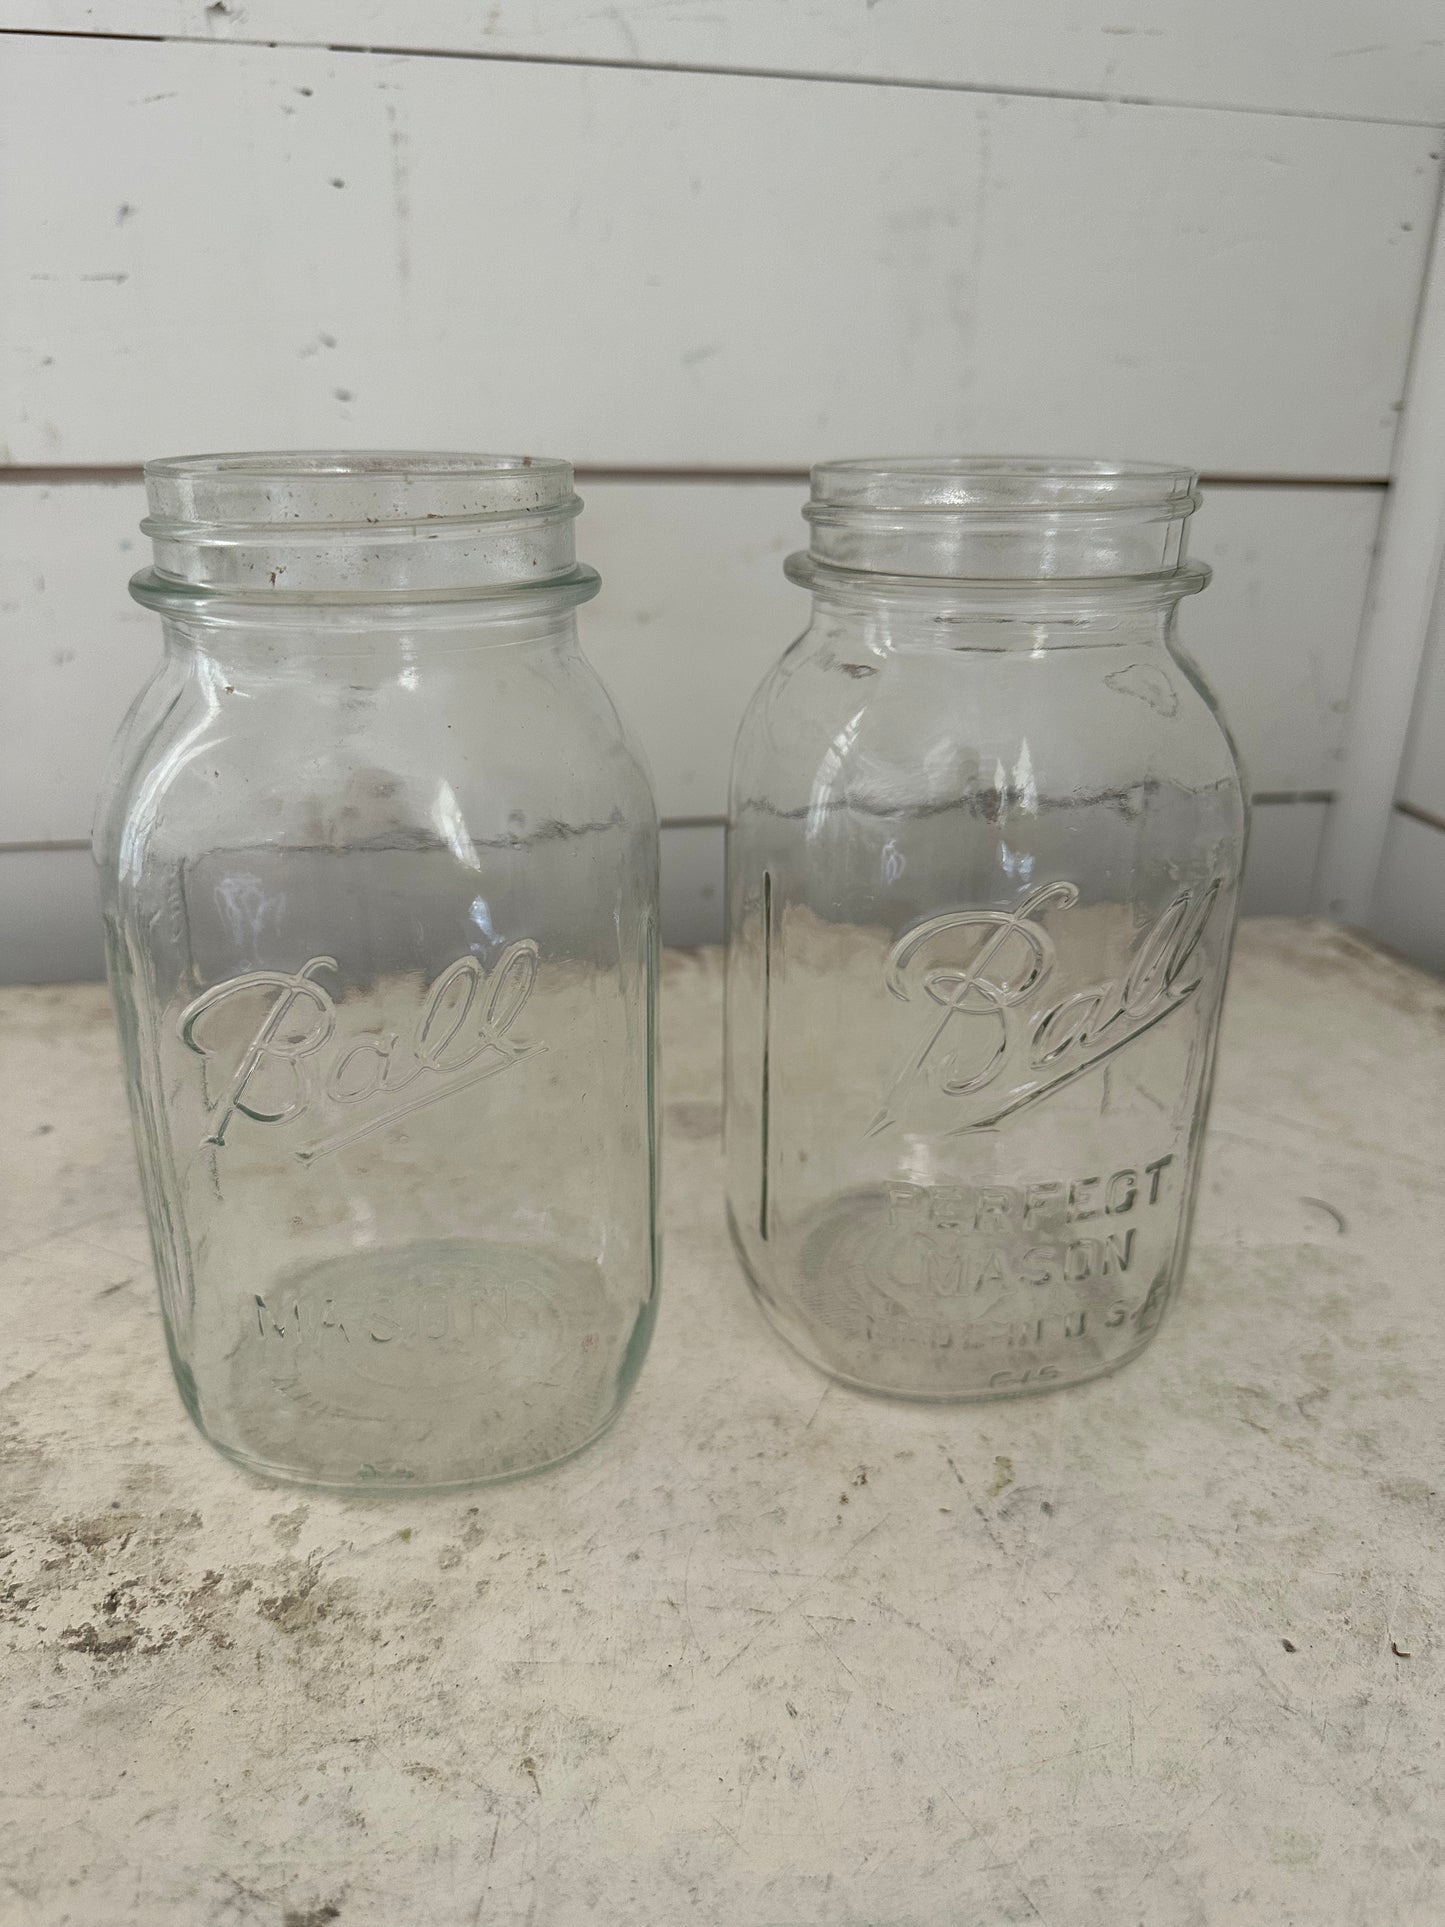 Vintage Ball canning jar sold individually